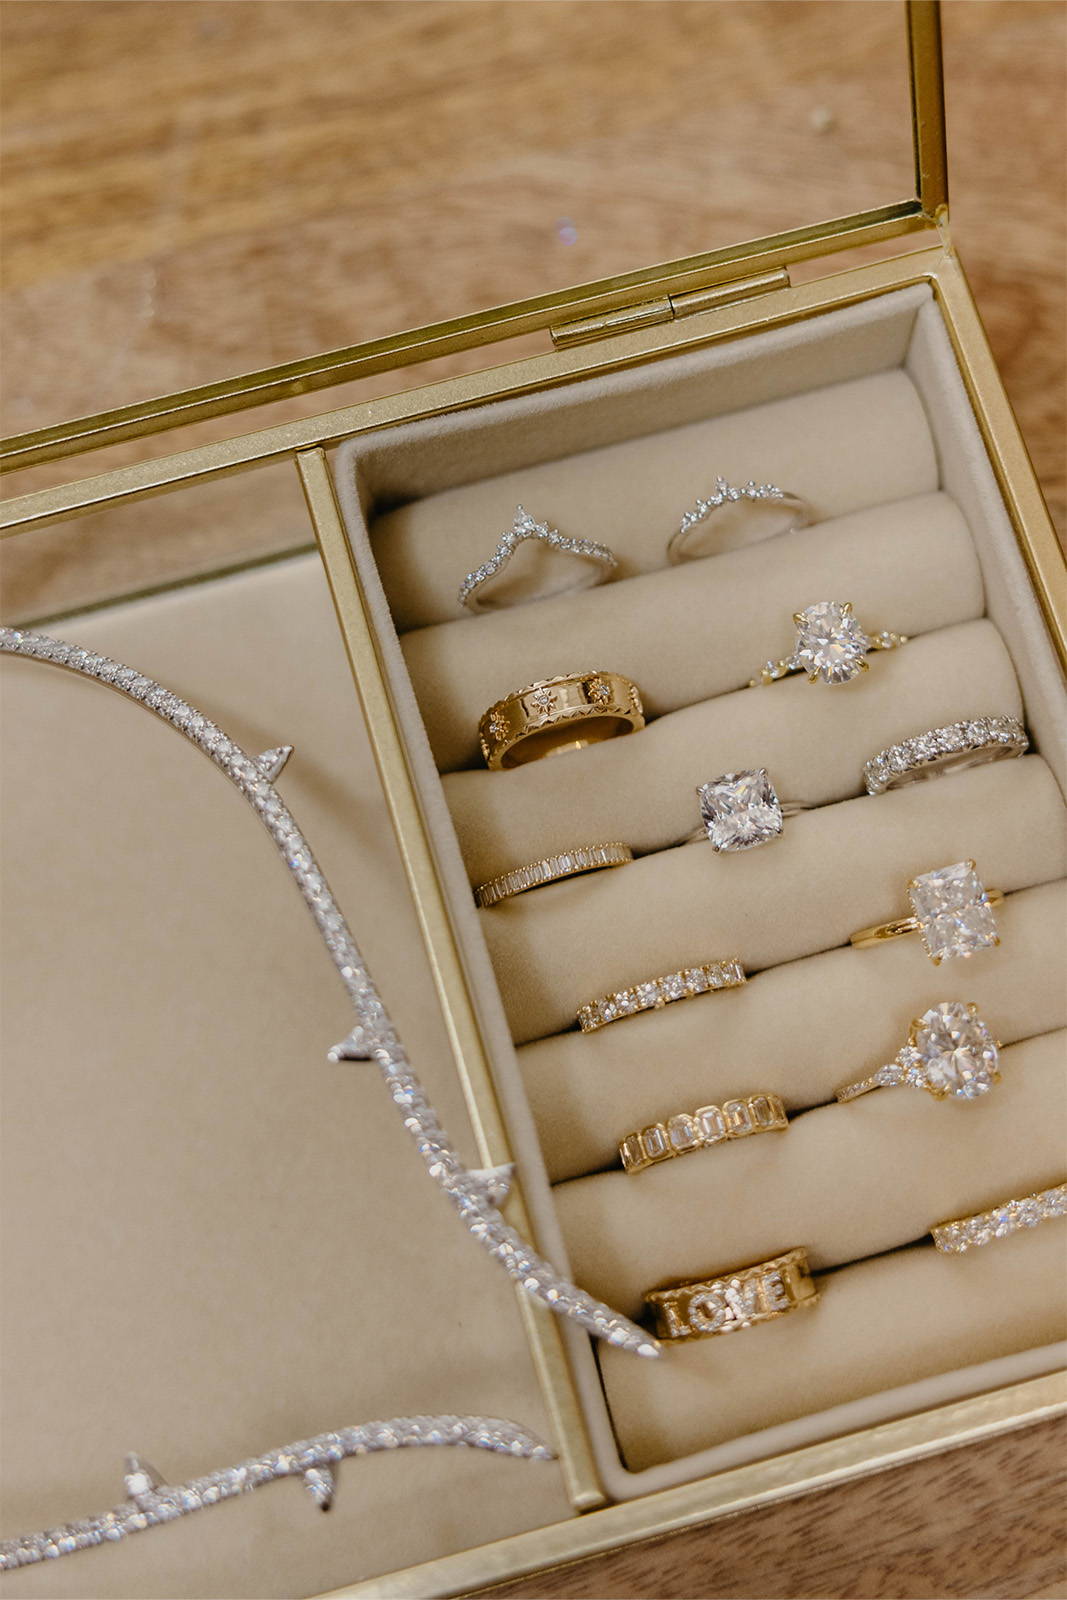 Diamond rings on display